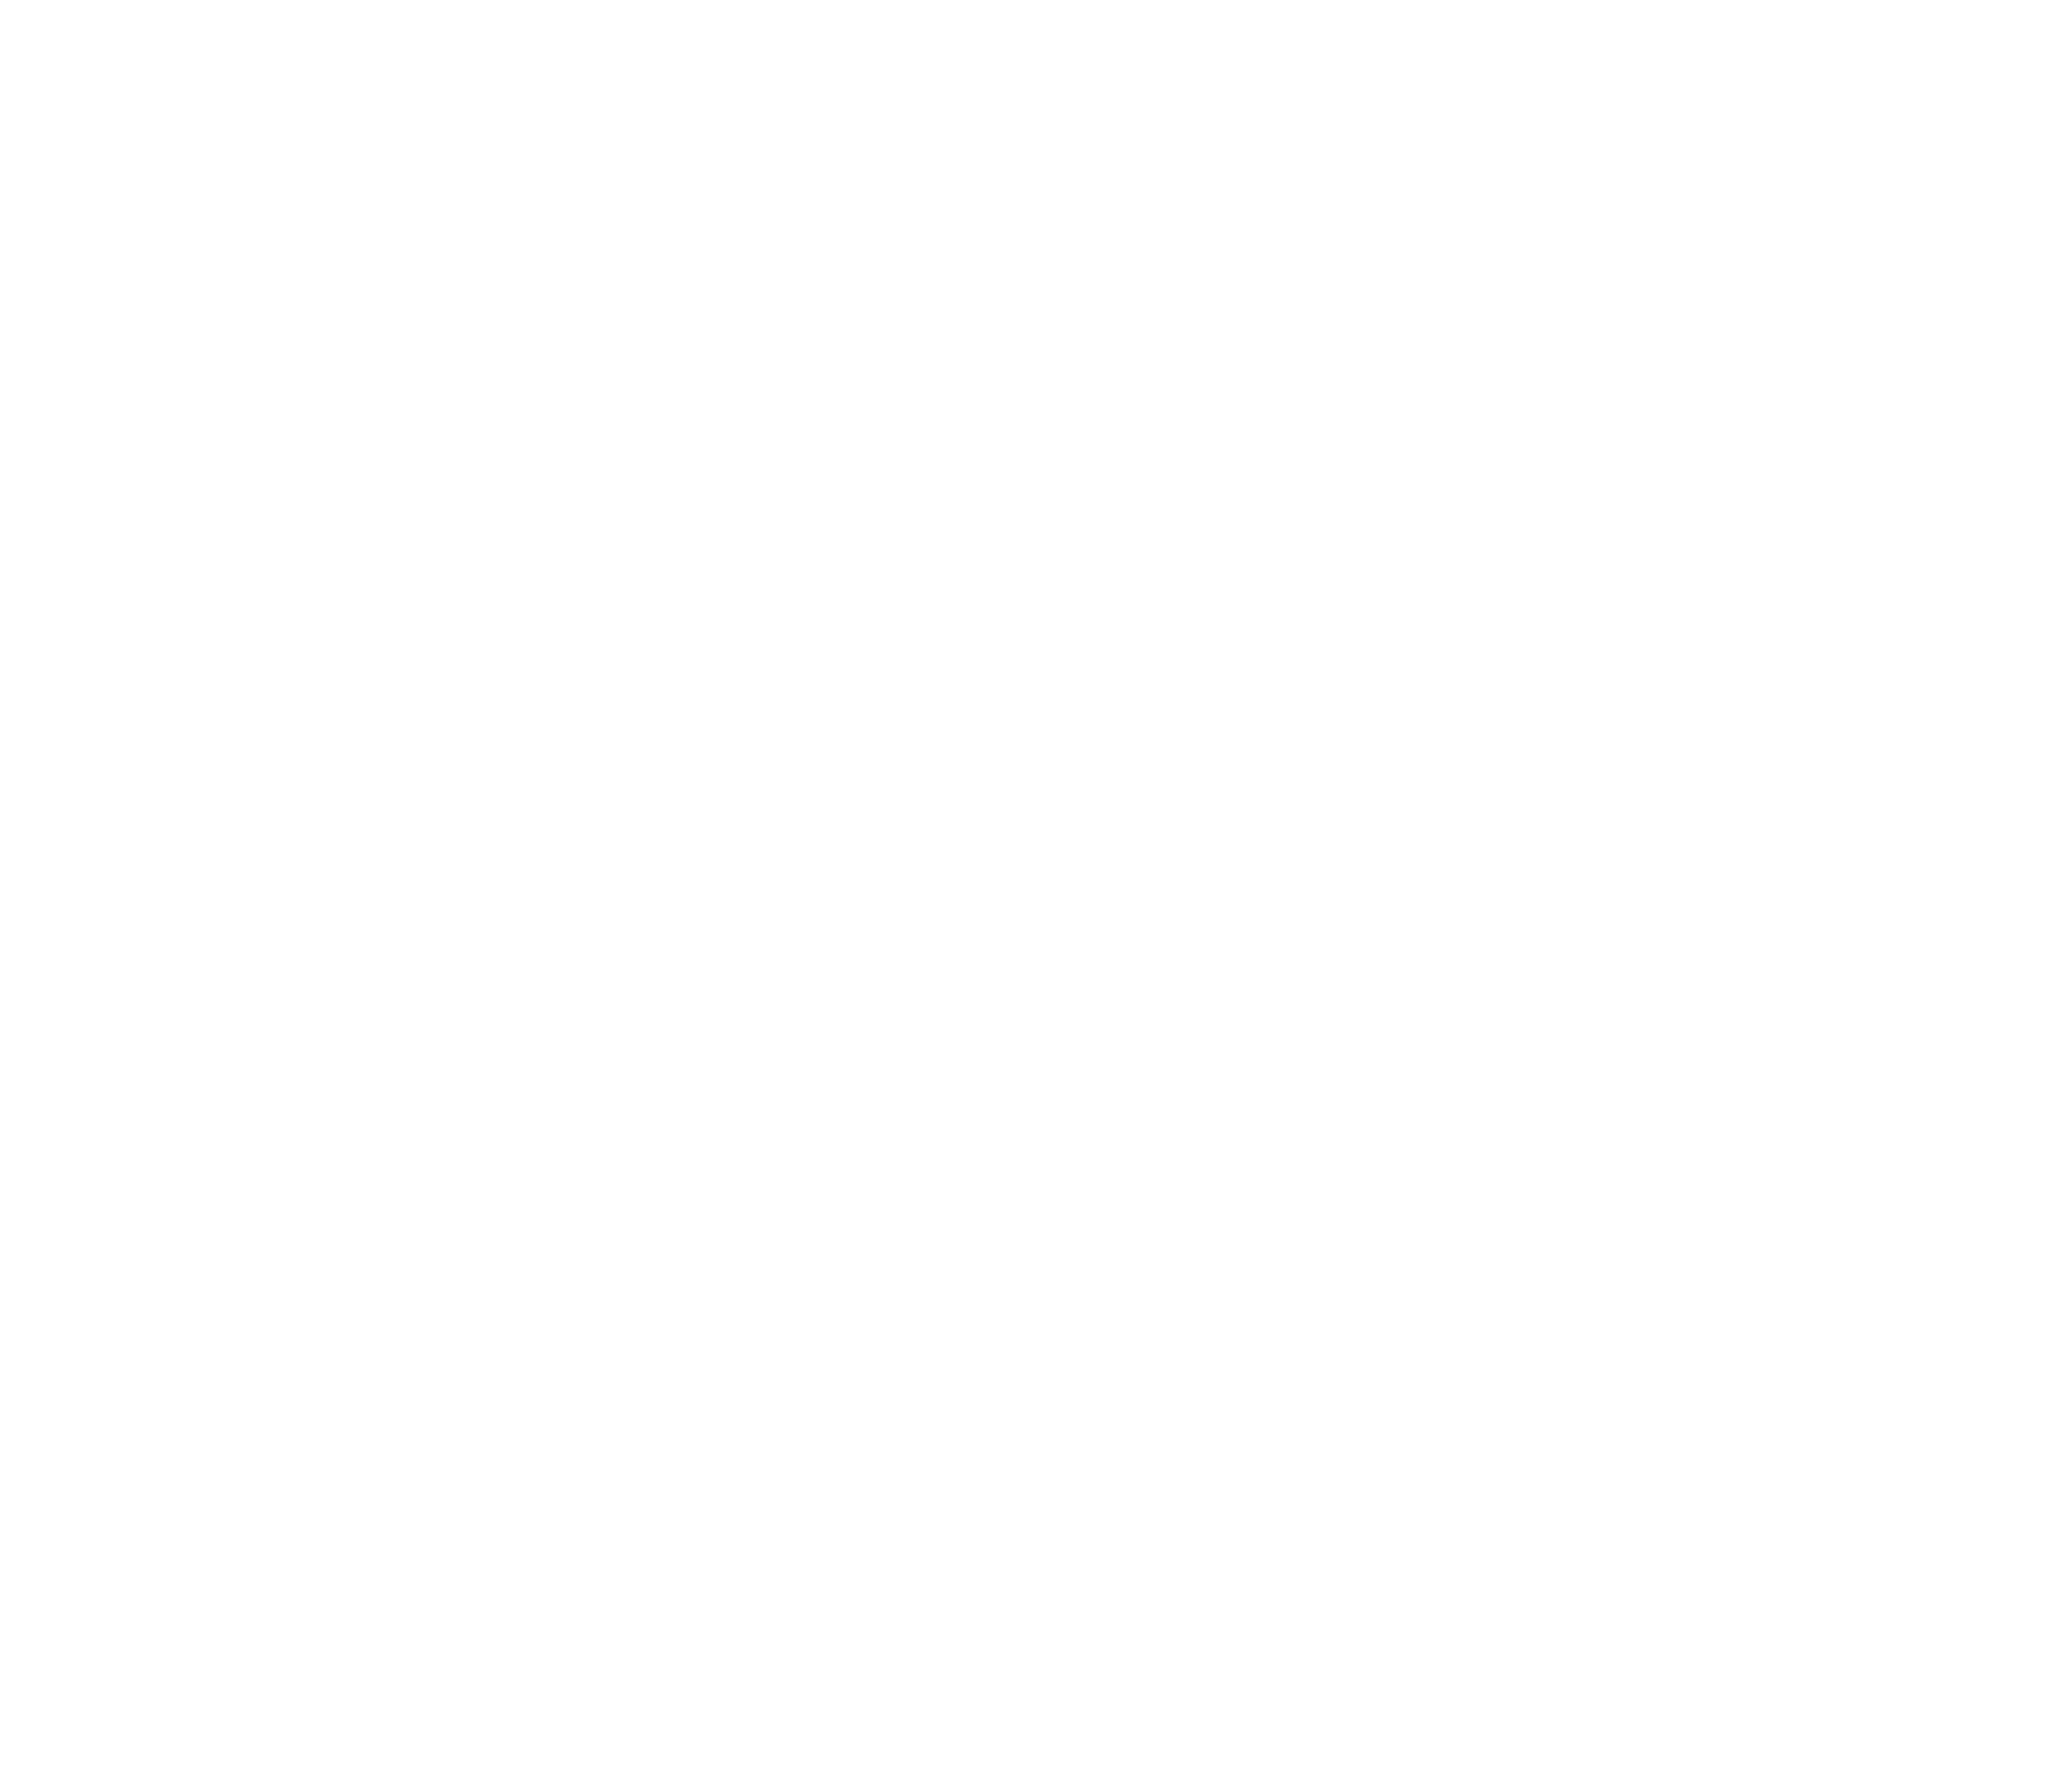 fhfa's logo